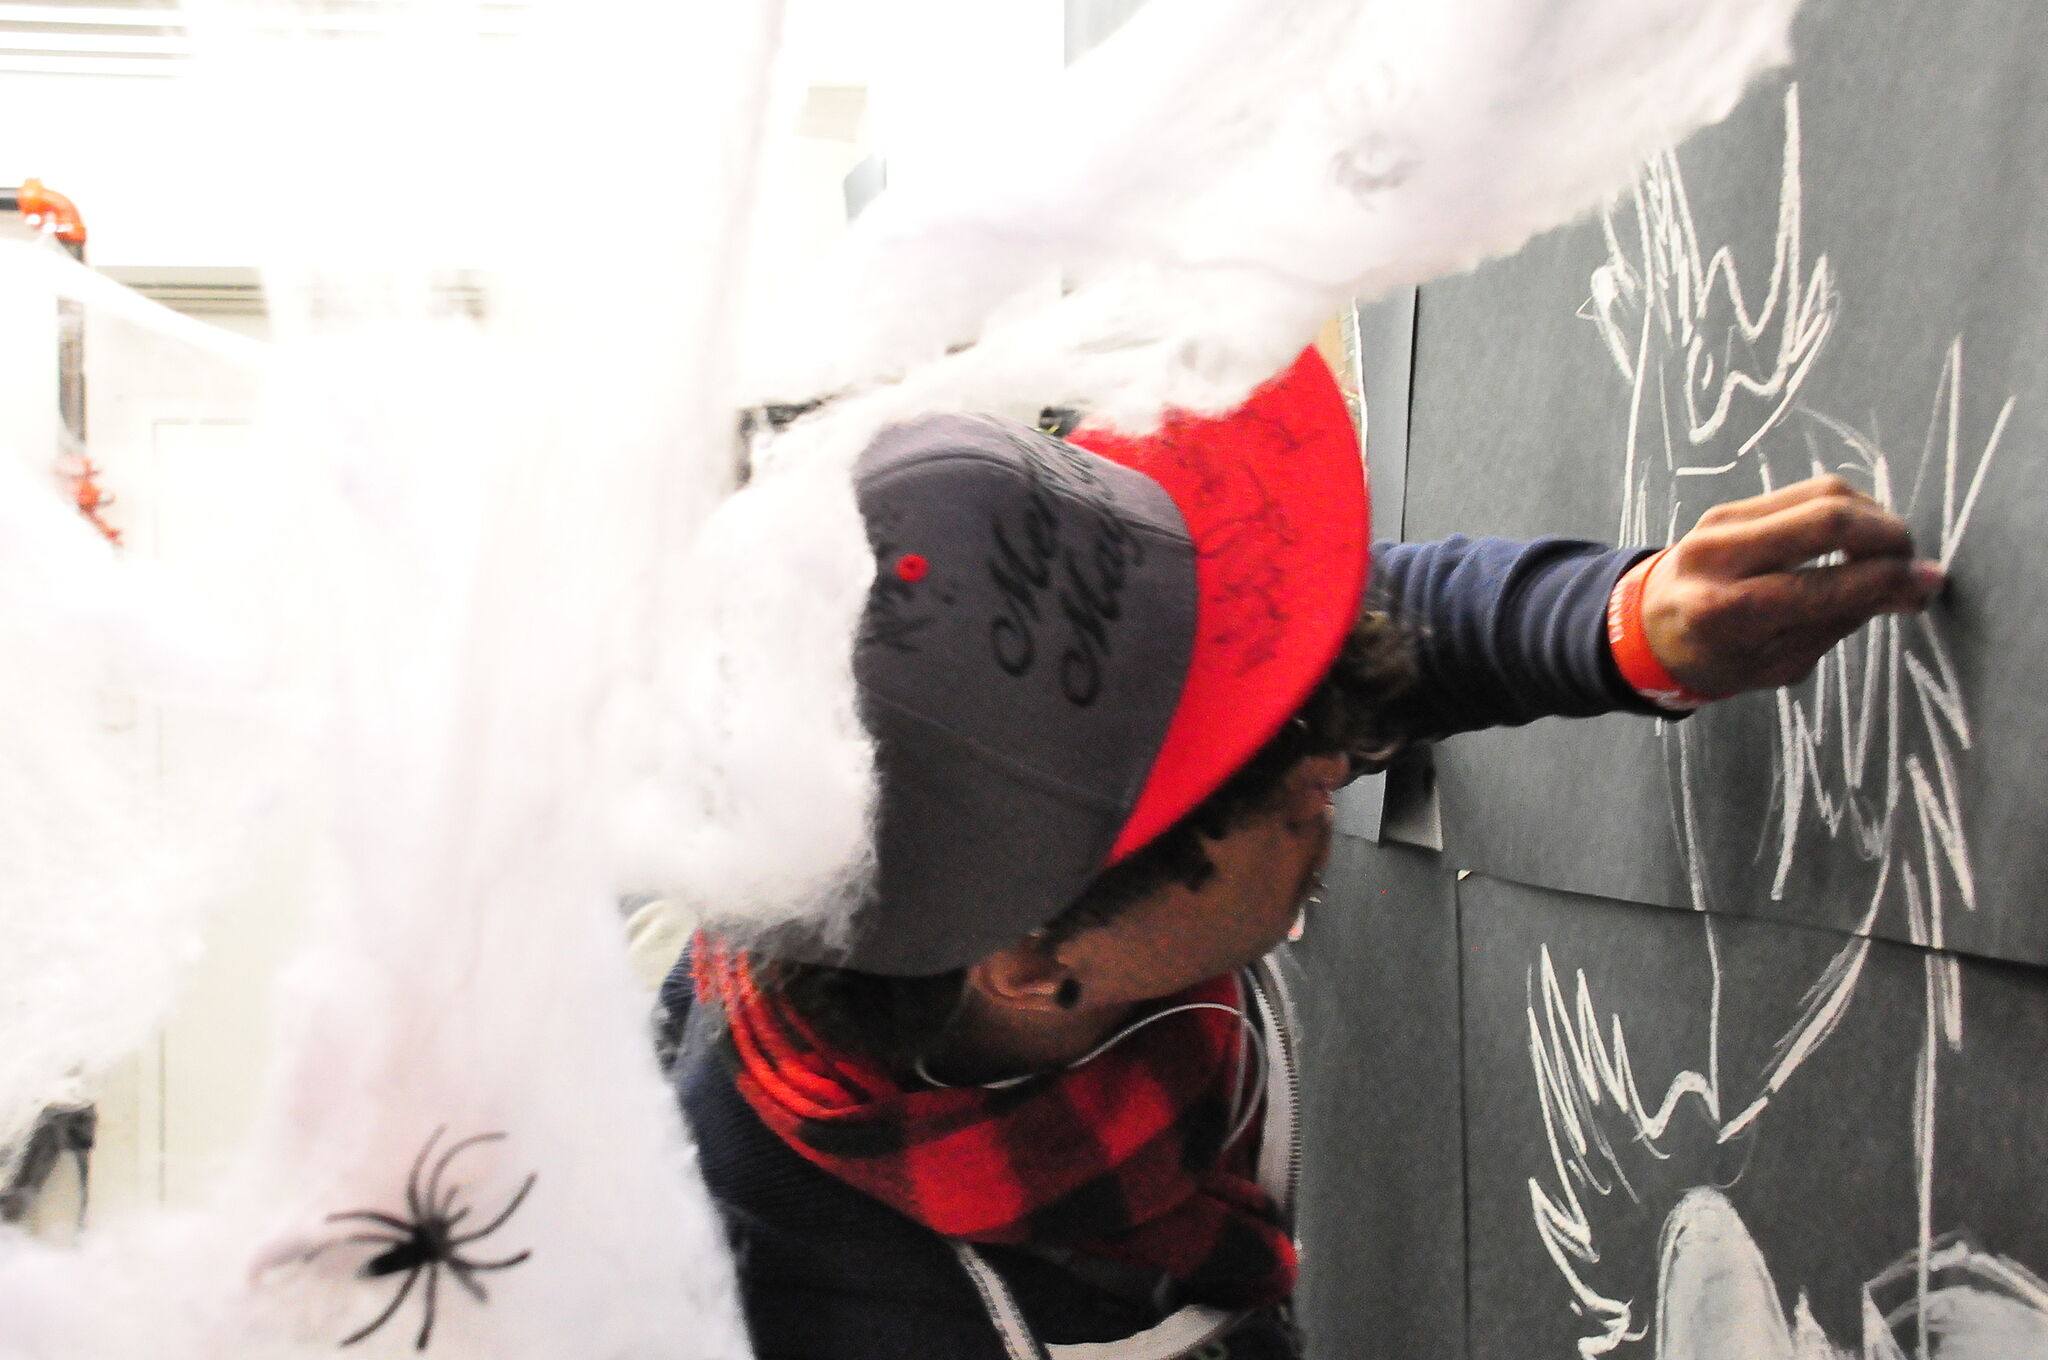 teen writing on wall with cobwebs behind